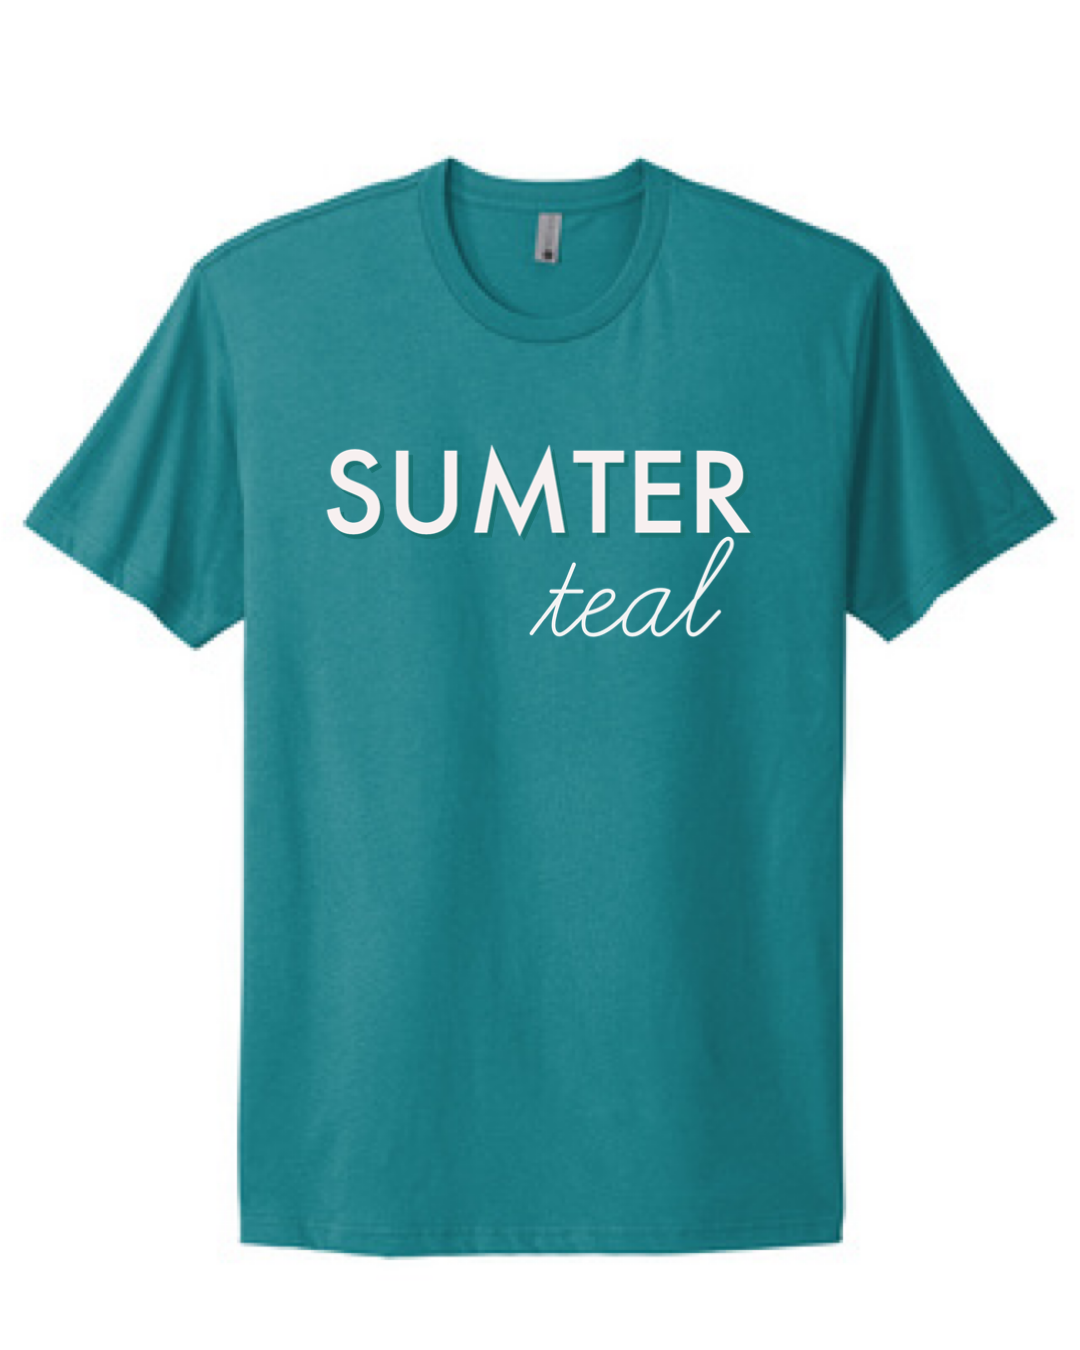 Sumter Teal Family Shirt